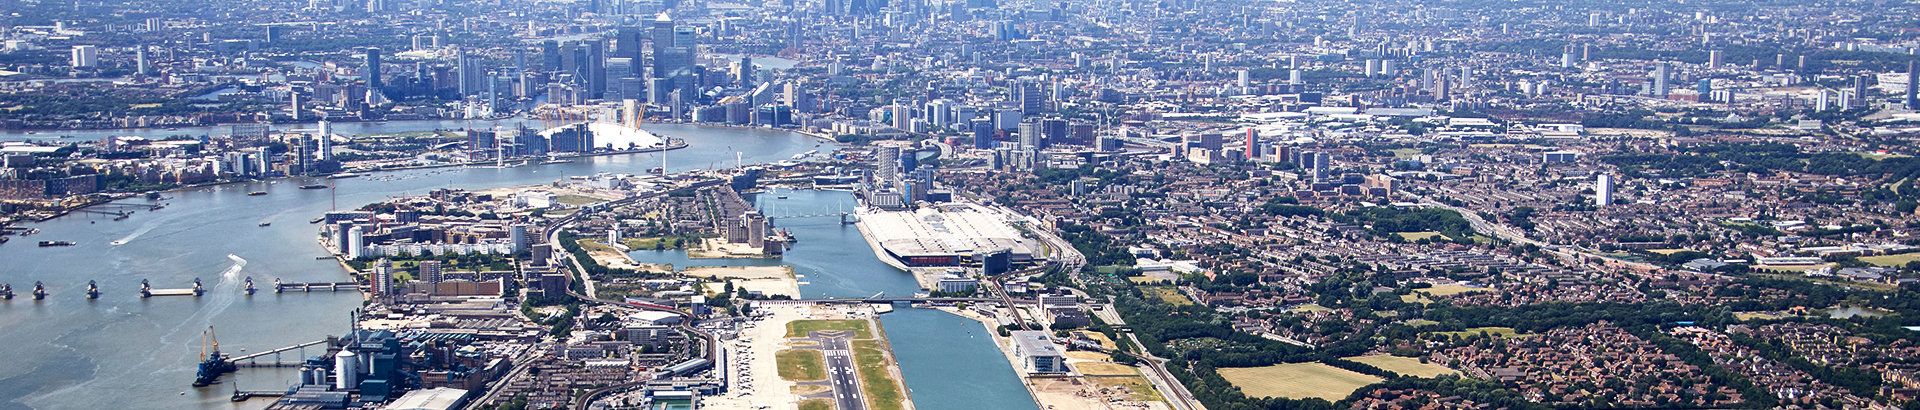 London City Airport Expansion